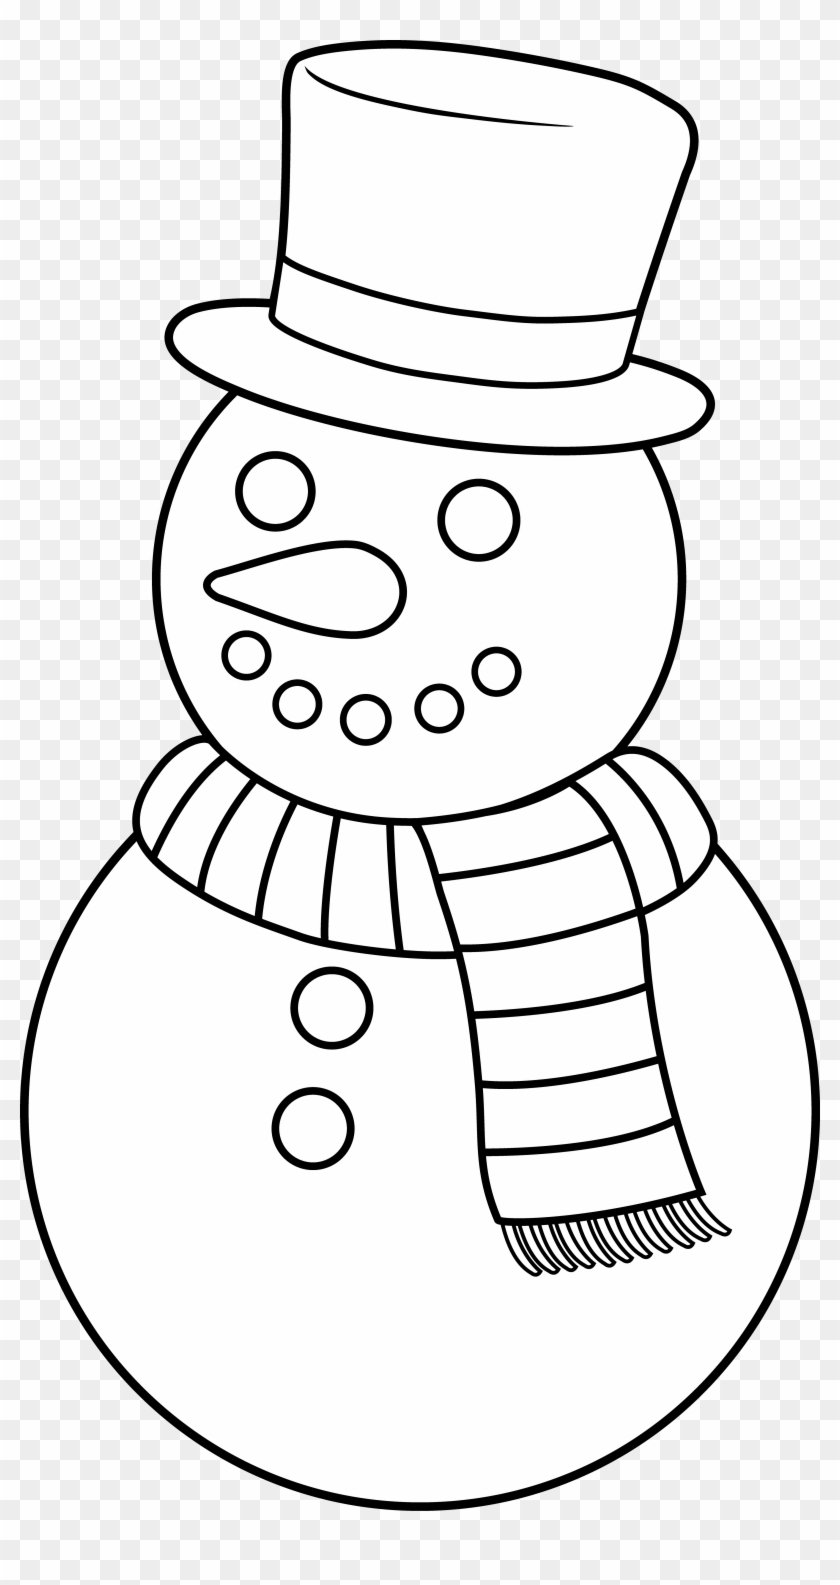 Colorable Christmas Snowman - Snowman Clip Art Black And White #1625418